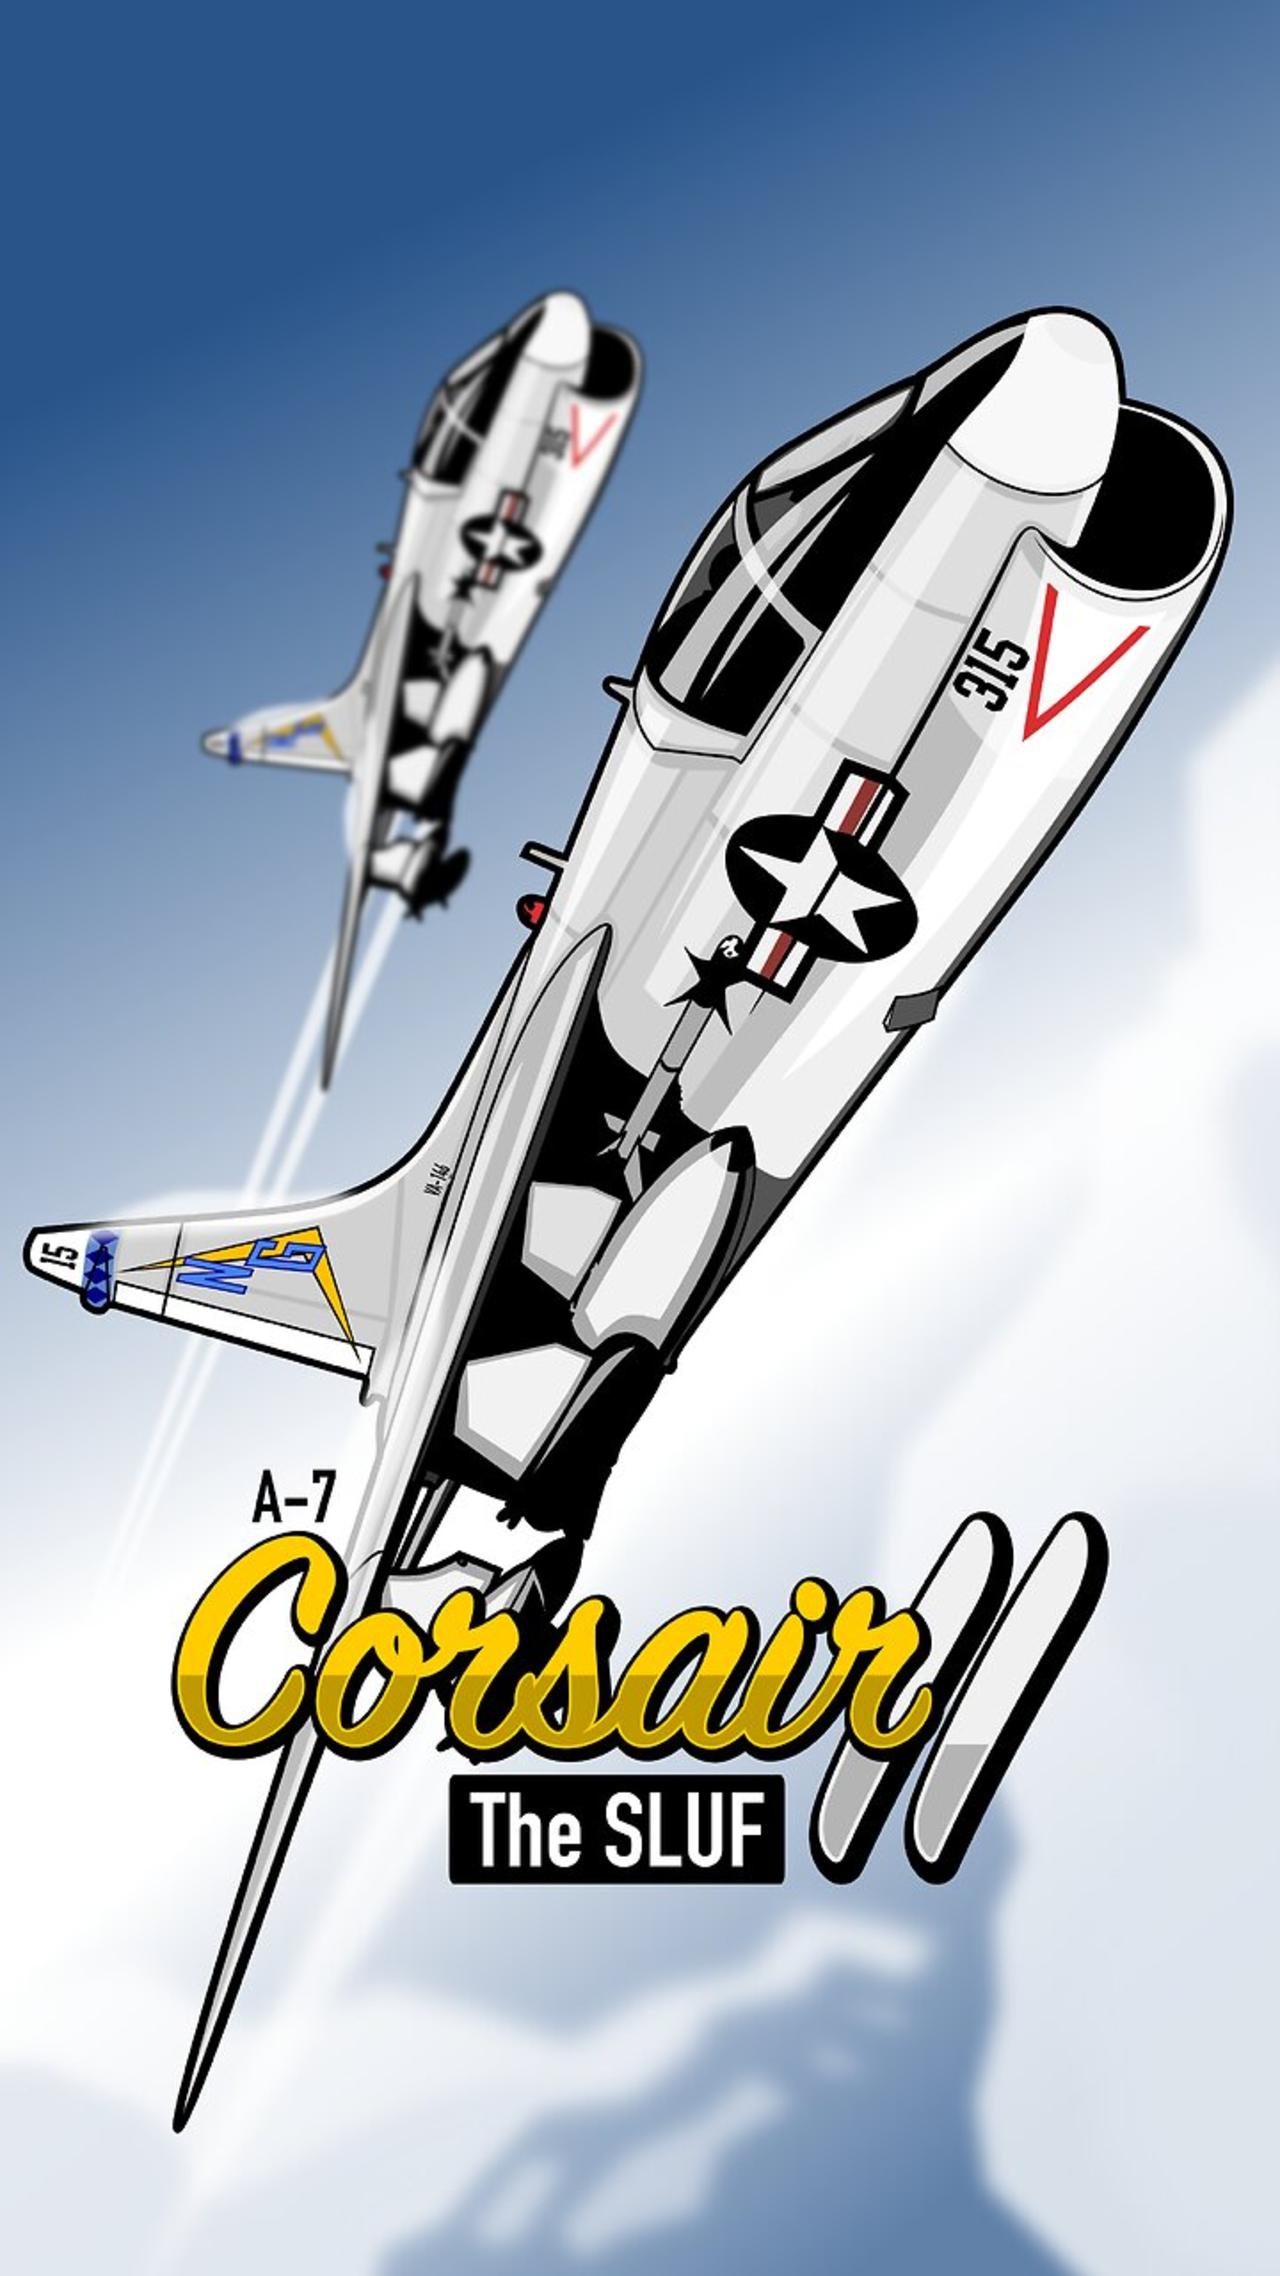 A-7 Corsair II: The SLUF!